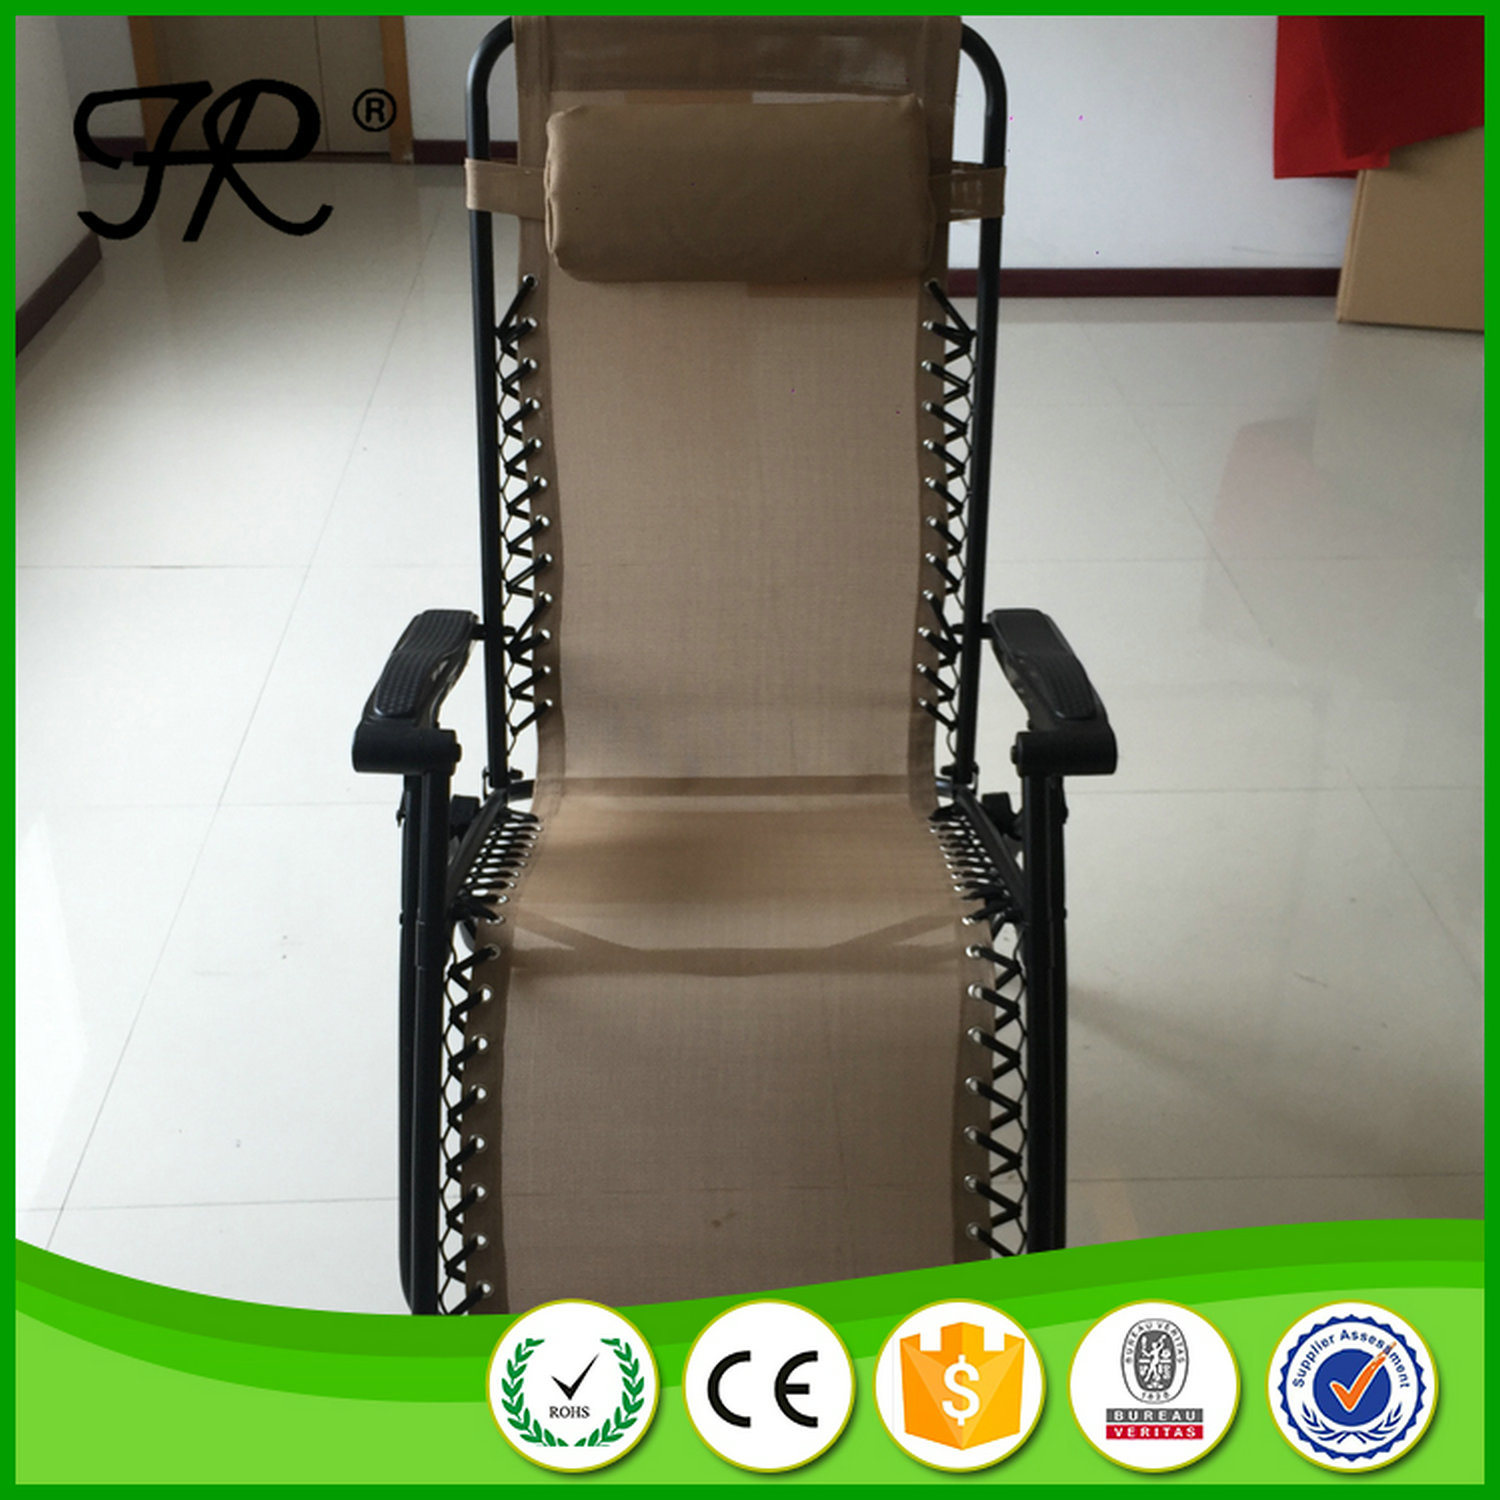 Zero Gravity Foldable Beach Chair for American Market